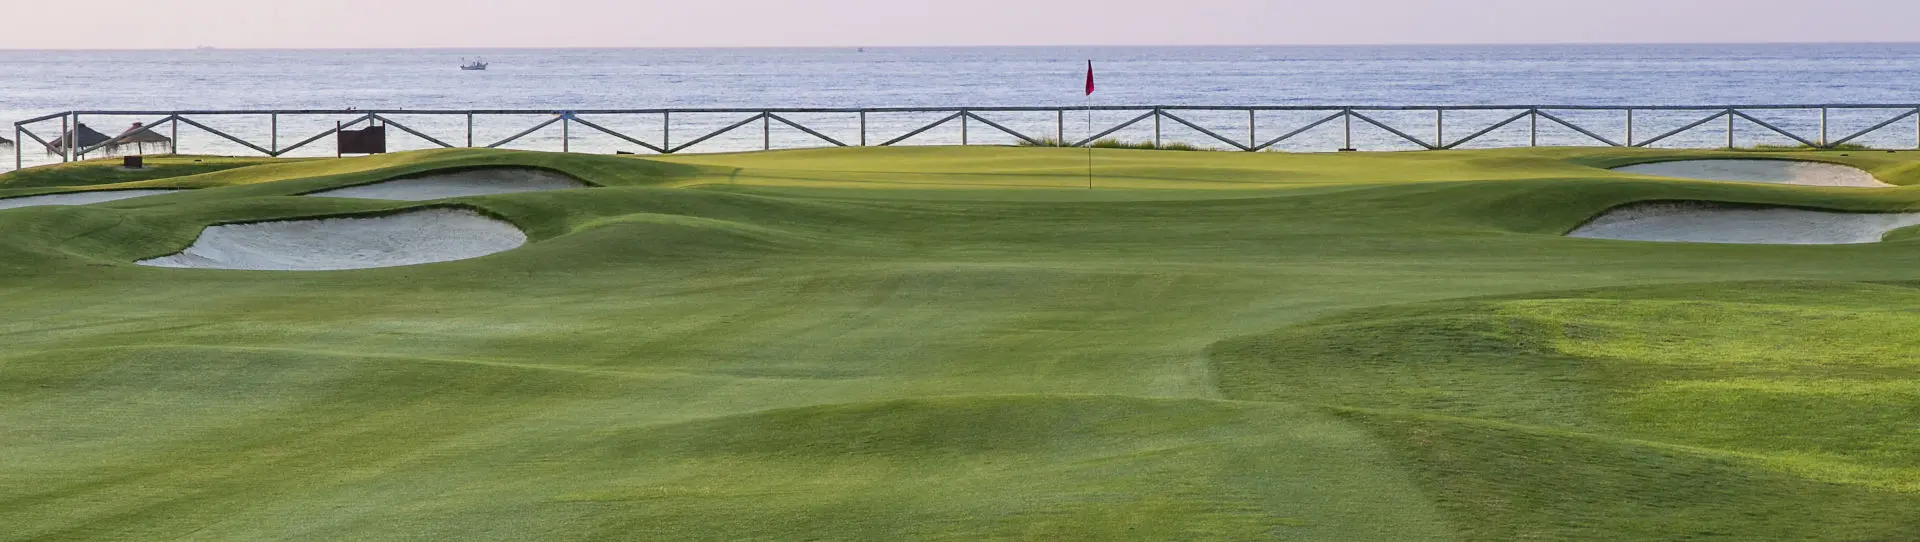 Spain golf courses - Guadalmina South Course - Photo 1